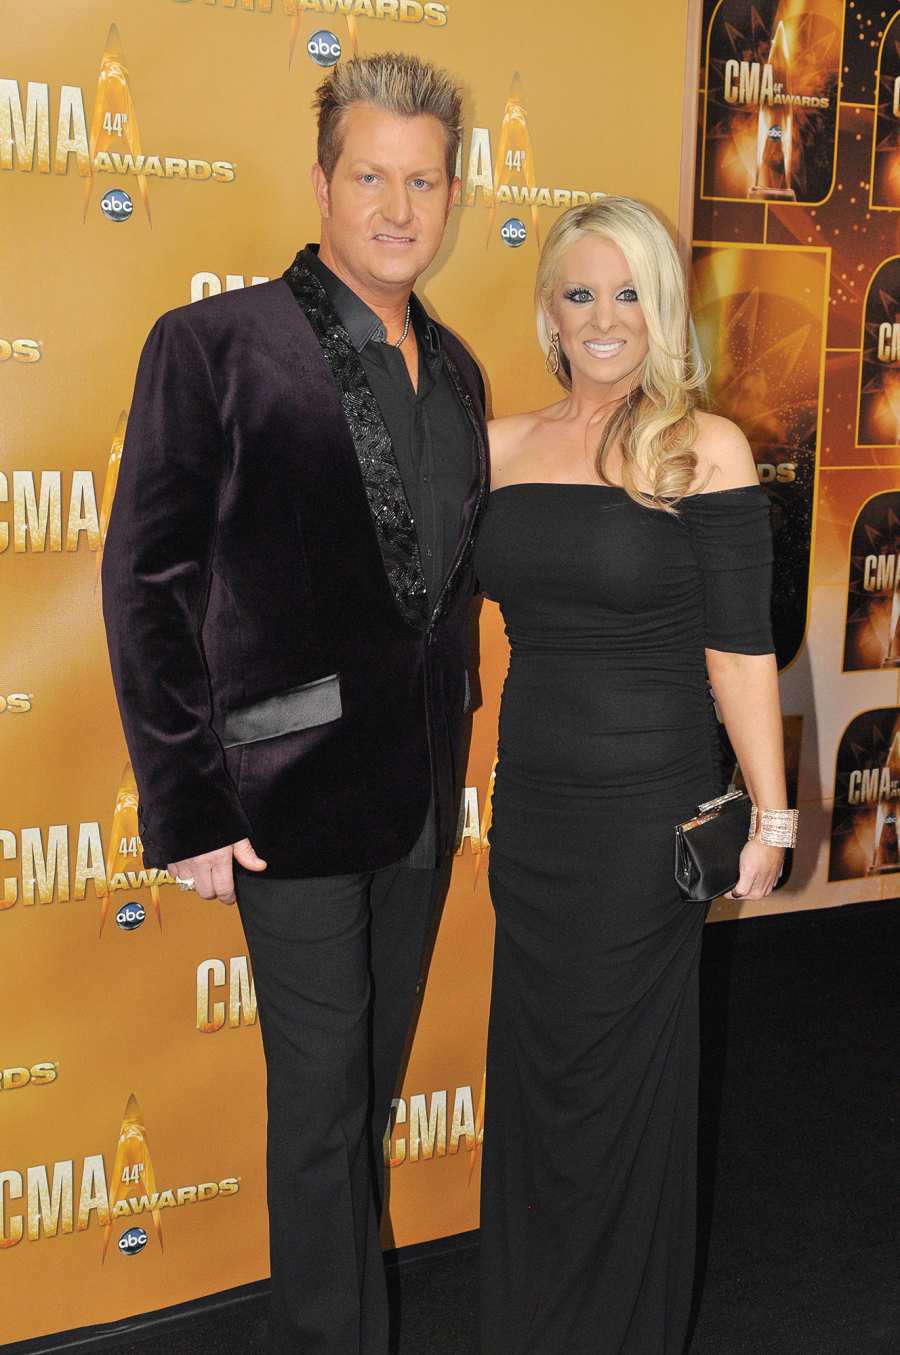 Rascal Flatts' Gary Levox and Wife Tara's Relationship Timeline 101 The 44th Annual CMA AwardsGary Levox